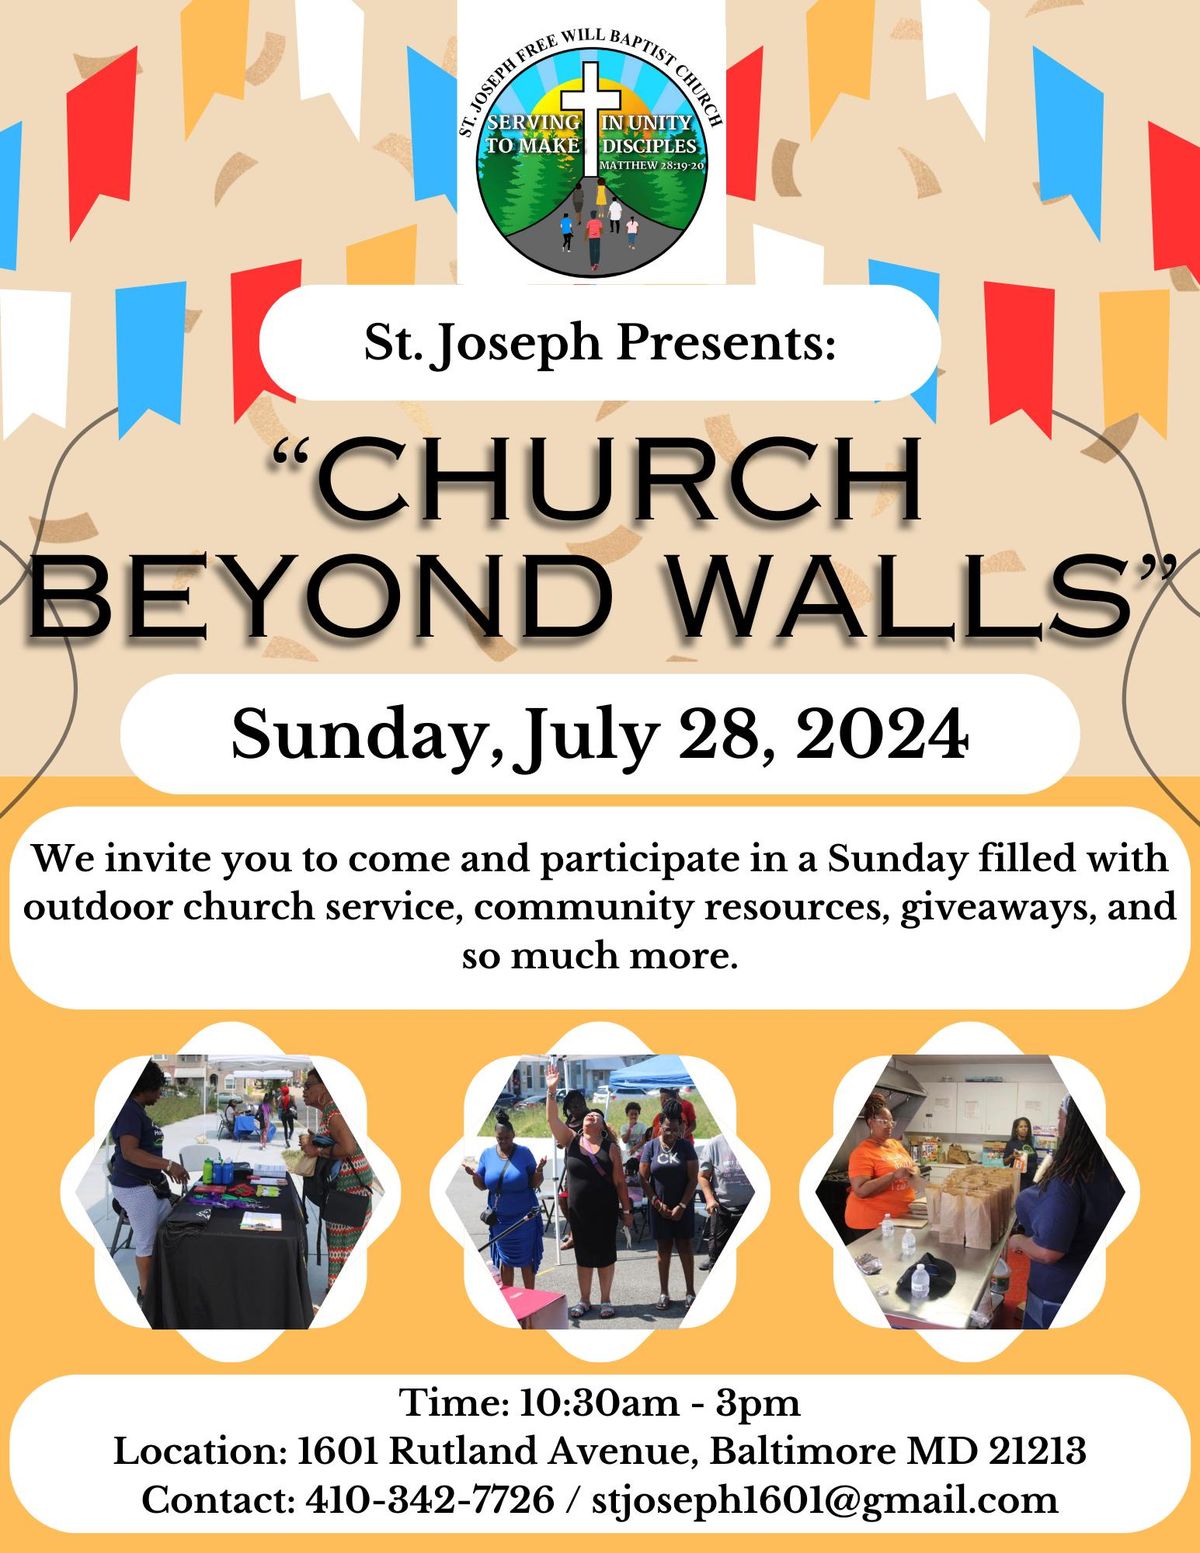 St. Joseph Free Will Baptist Church's "Church Beyond Walls" Community Event